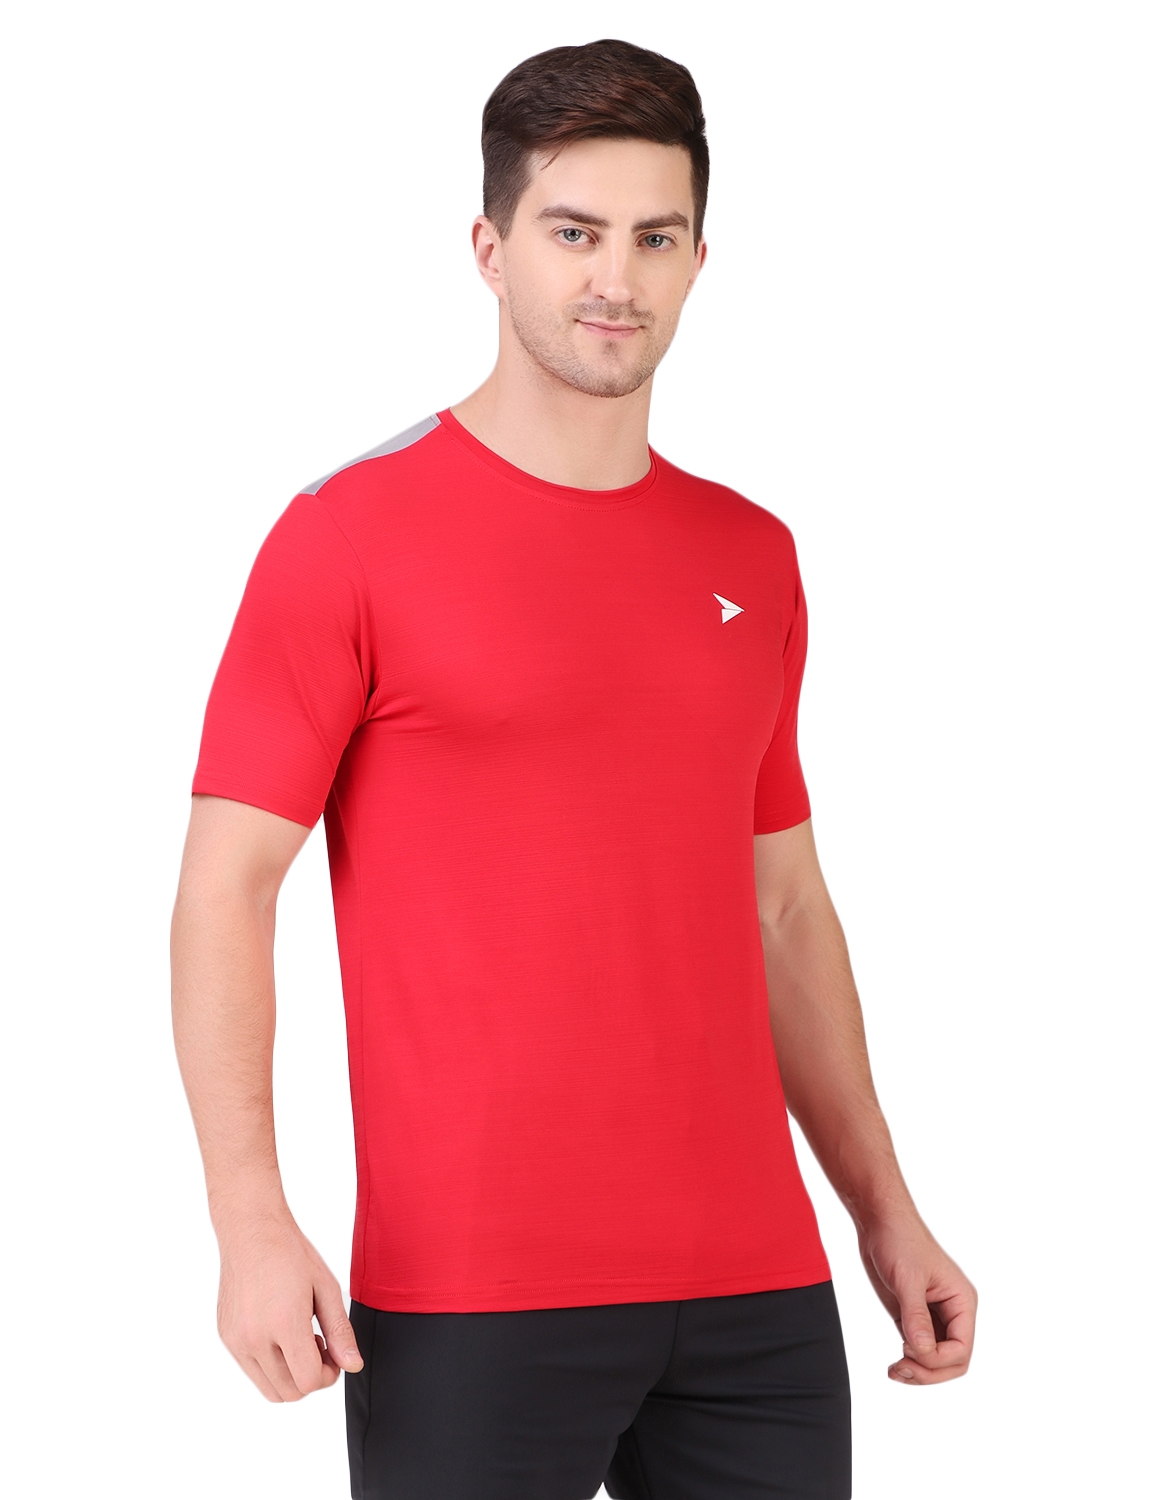 Fitinc | Fitinc Men's Round Neck Slimfit Gym & Active Sports Red T-Shirt 2